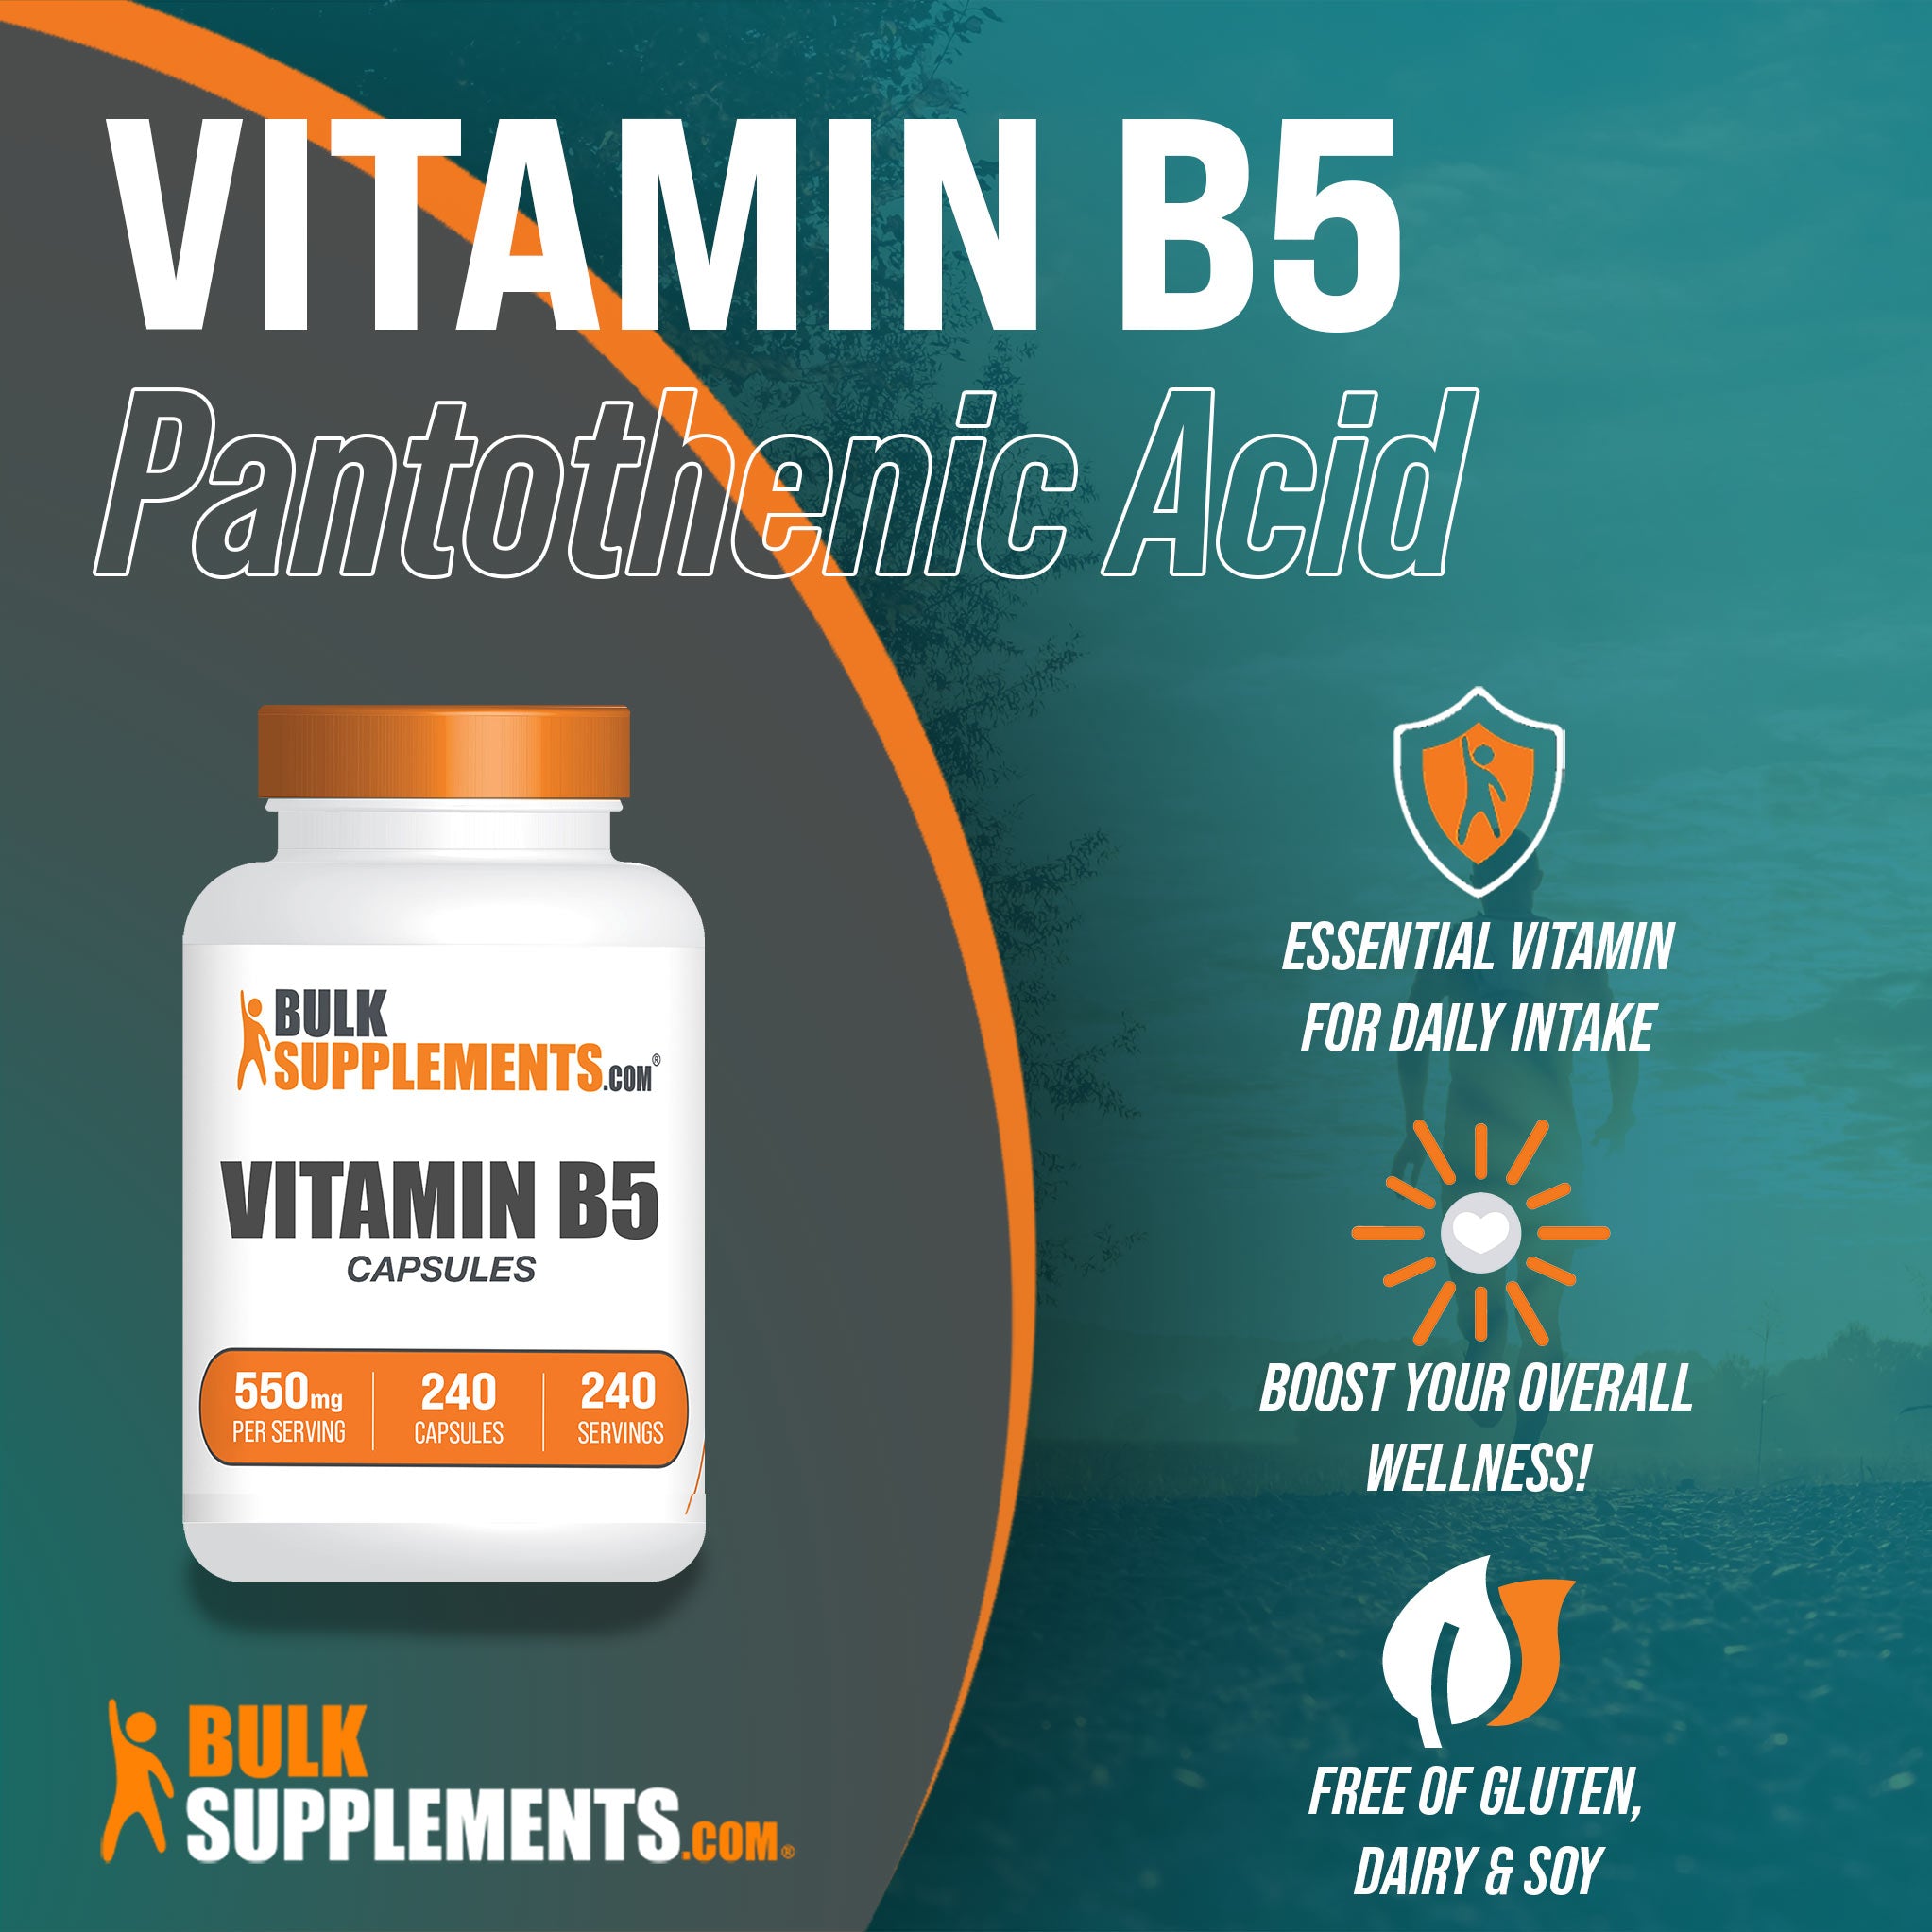 vitamin b5 pantothenic acid